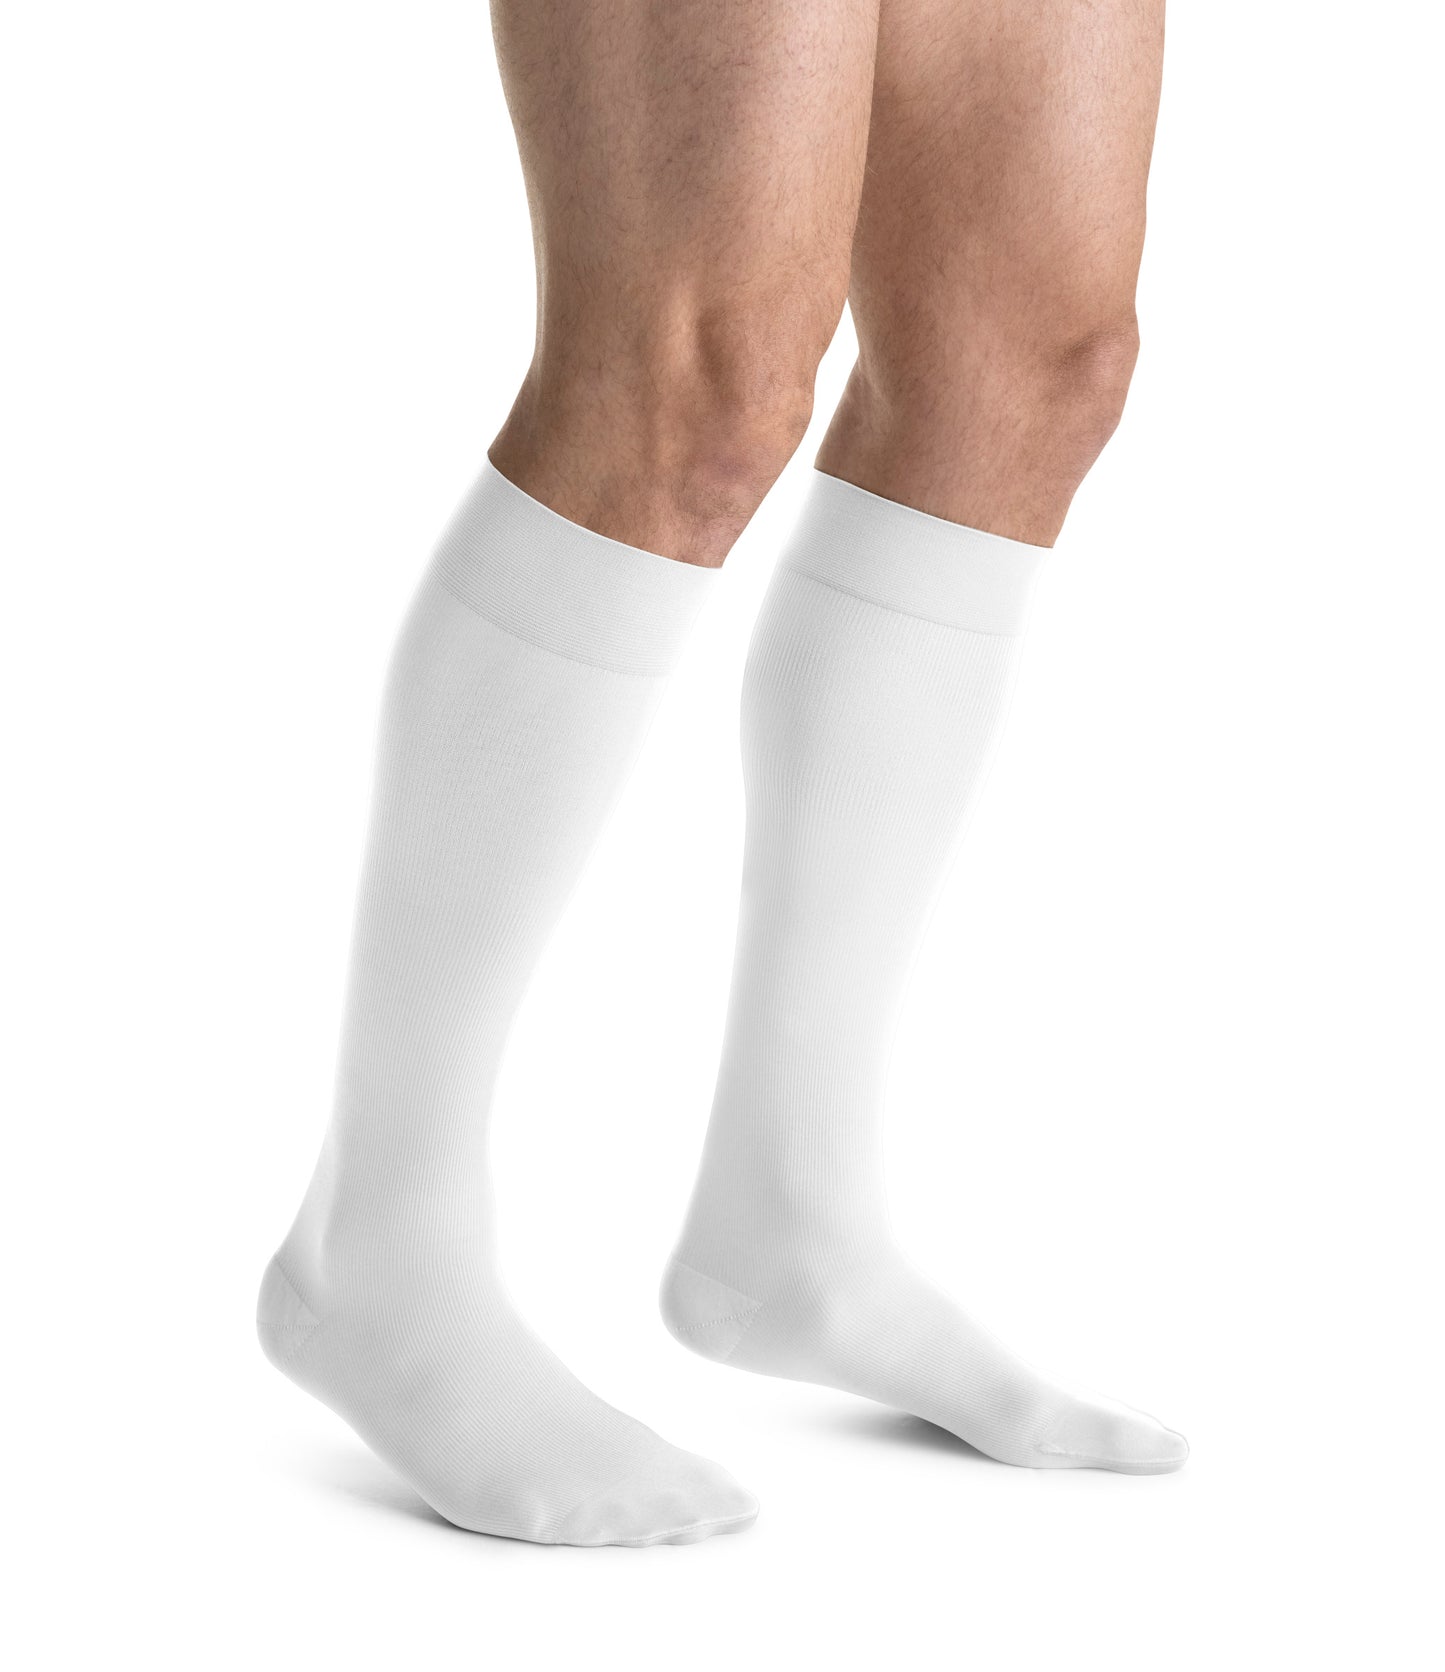 JOBST forMen Compression Socks 15-20 mmHg Knee High Closed Toe